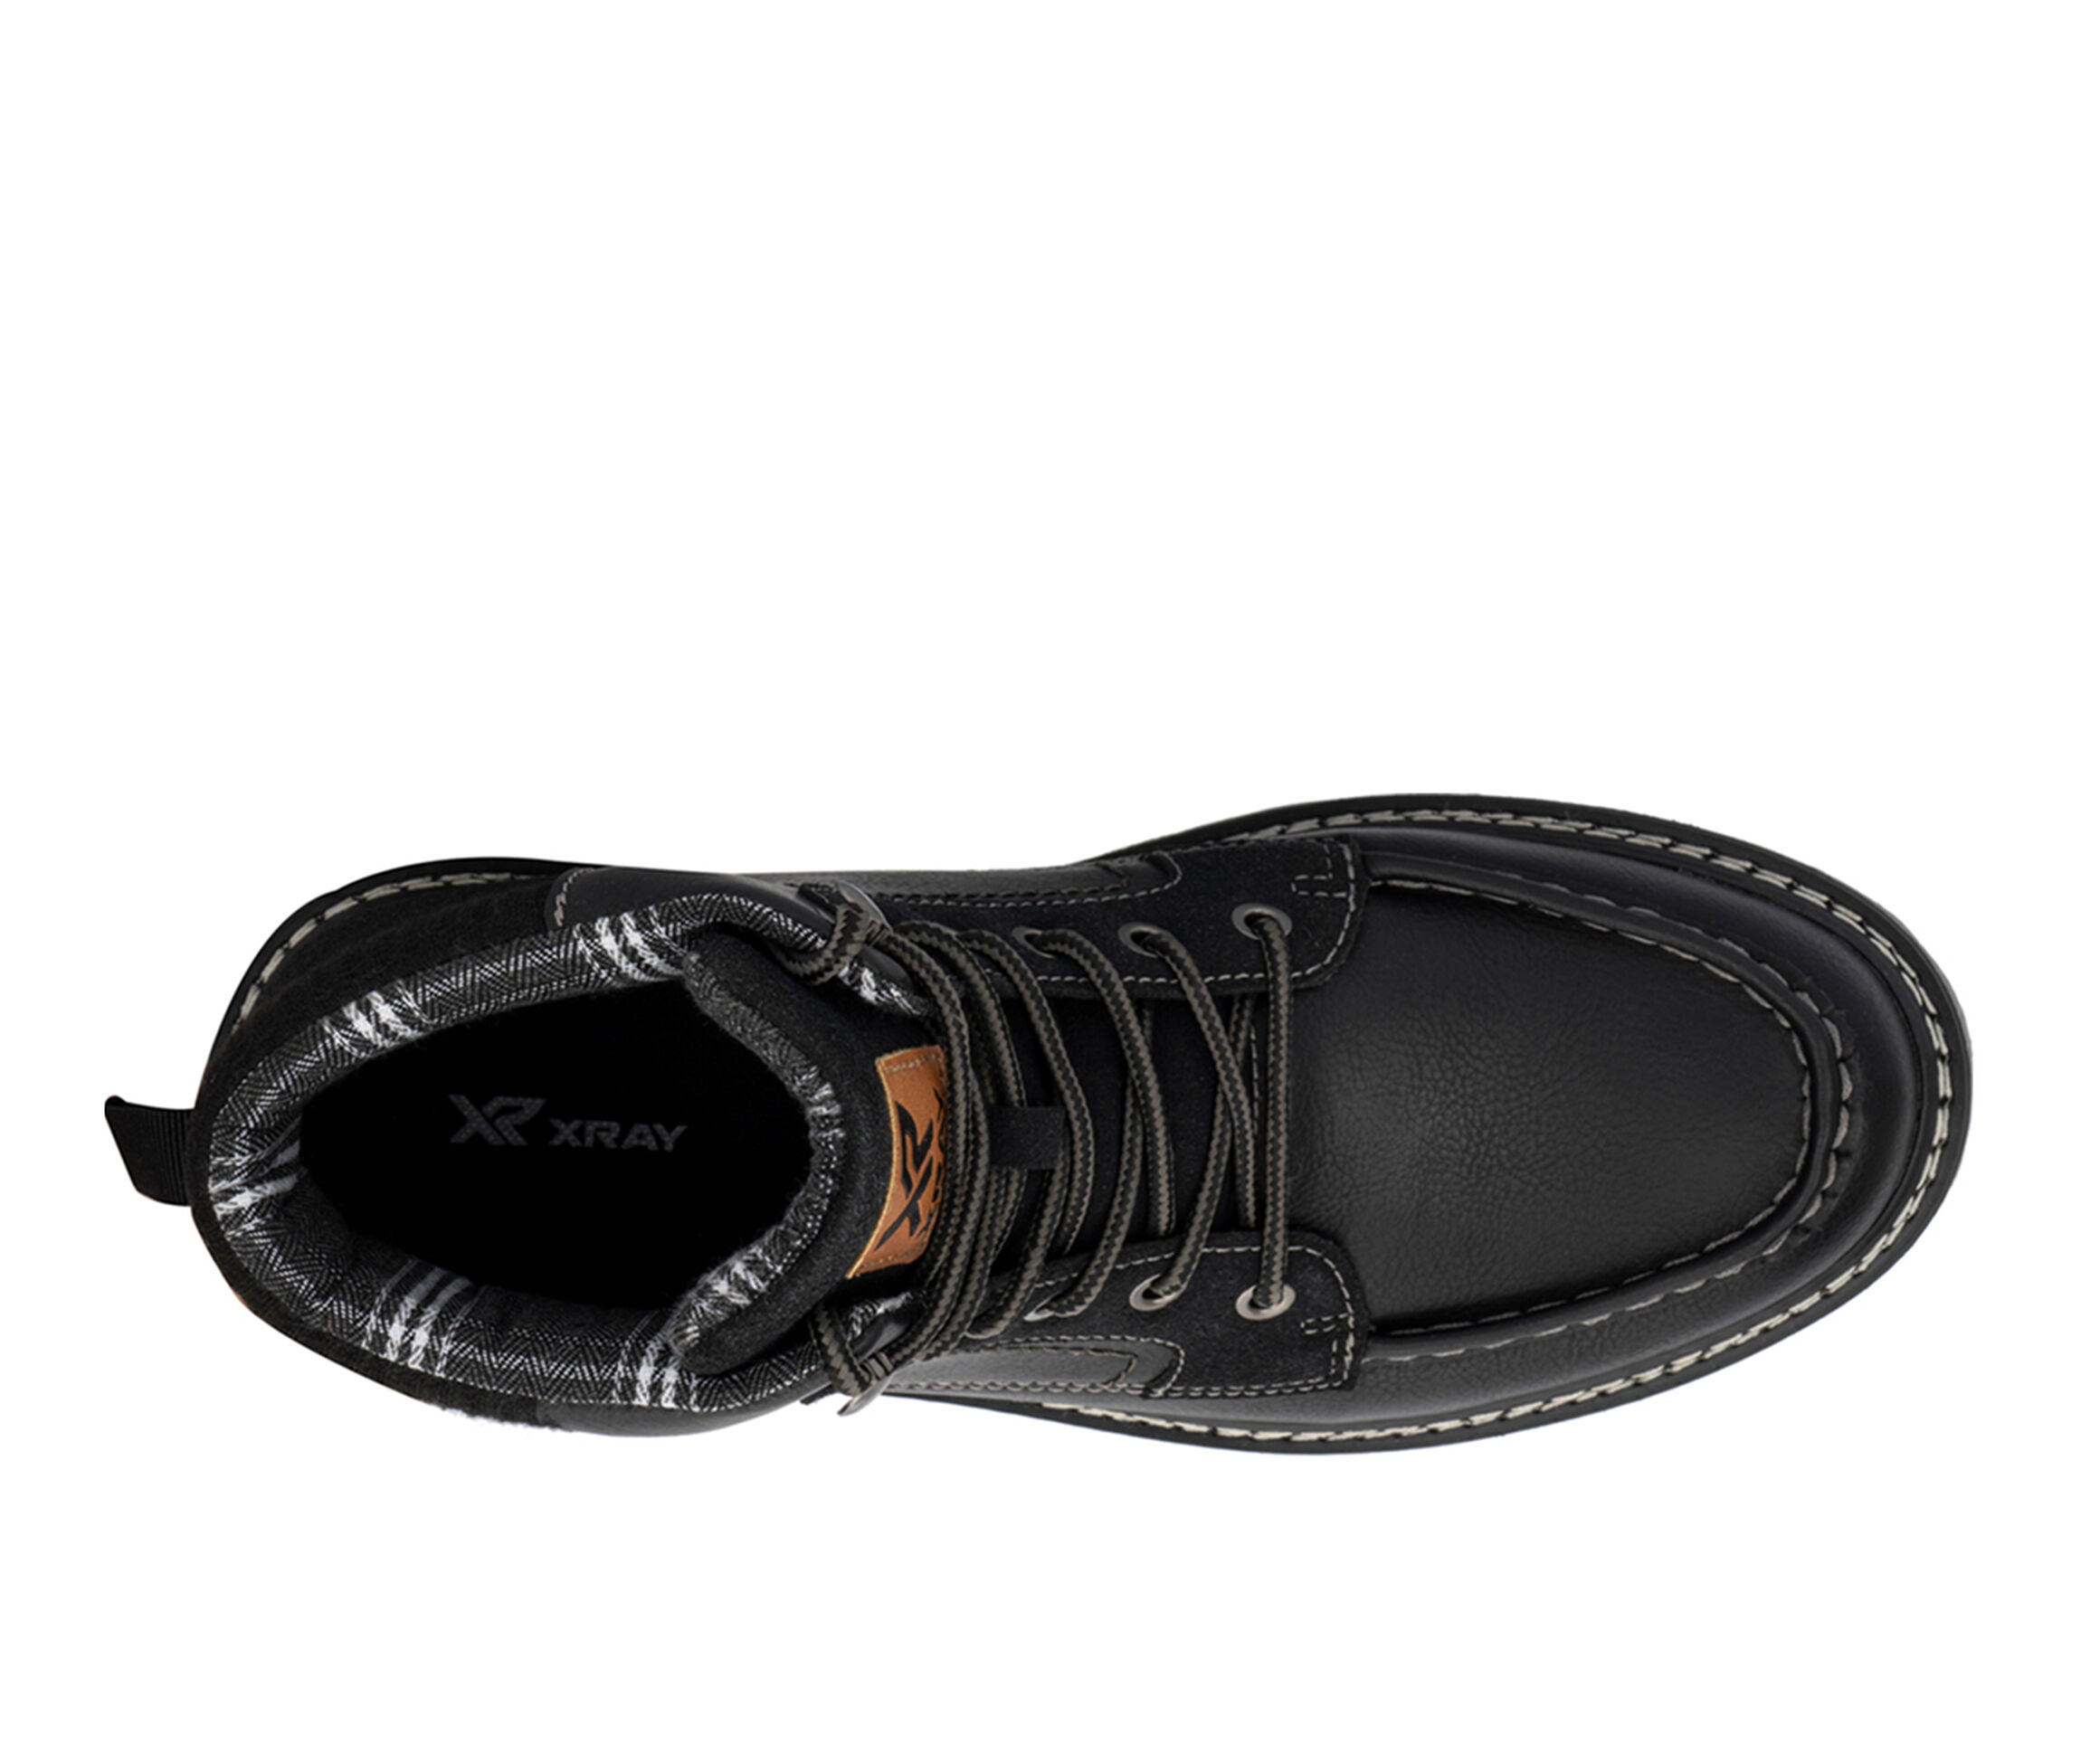 Xray footwear mens boots | Shoe Carnival